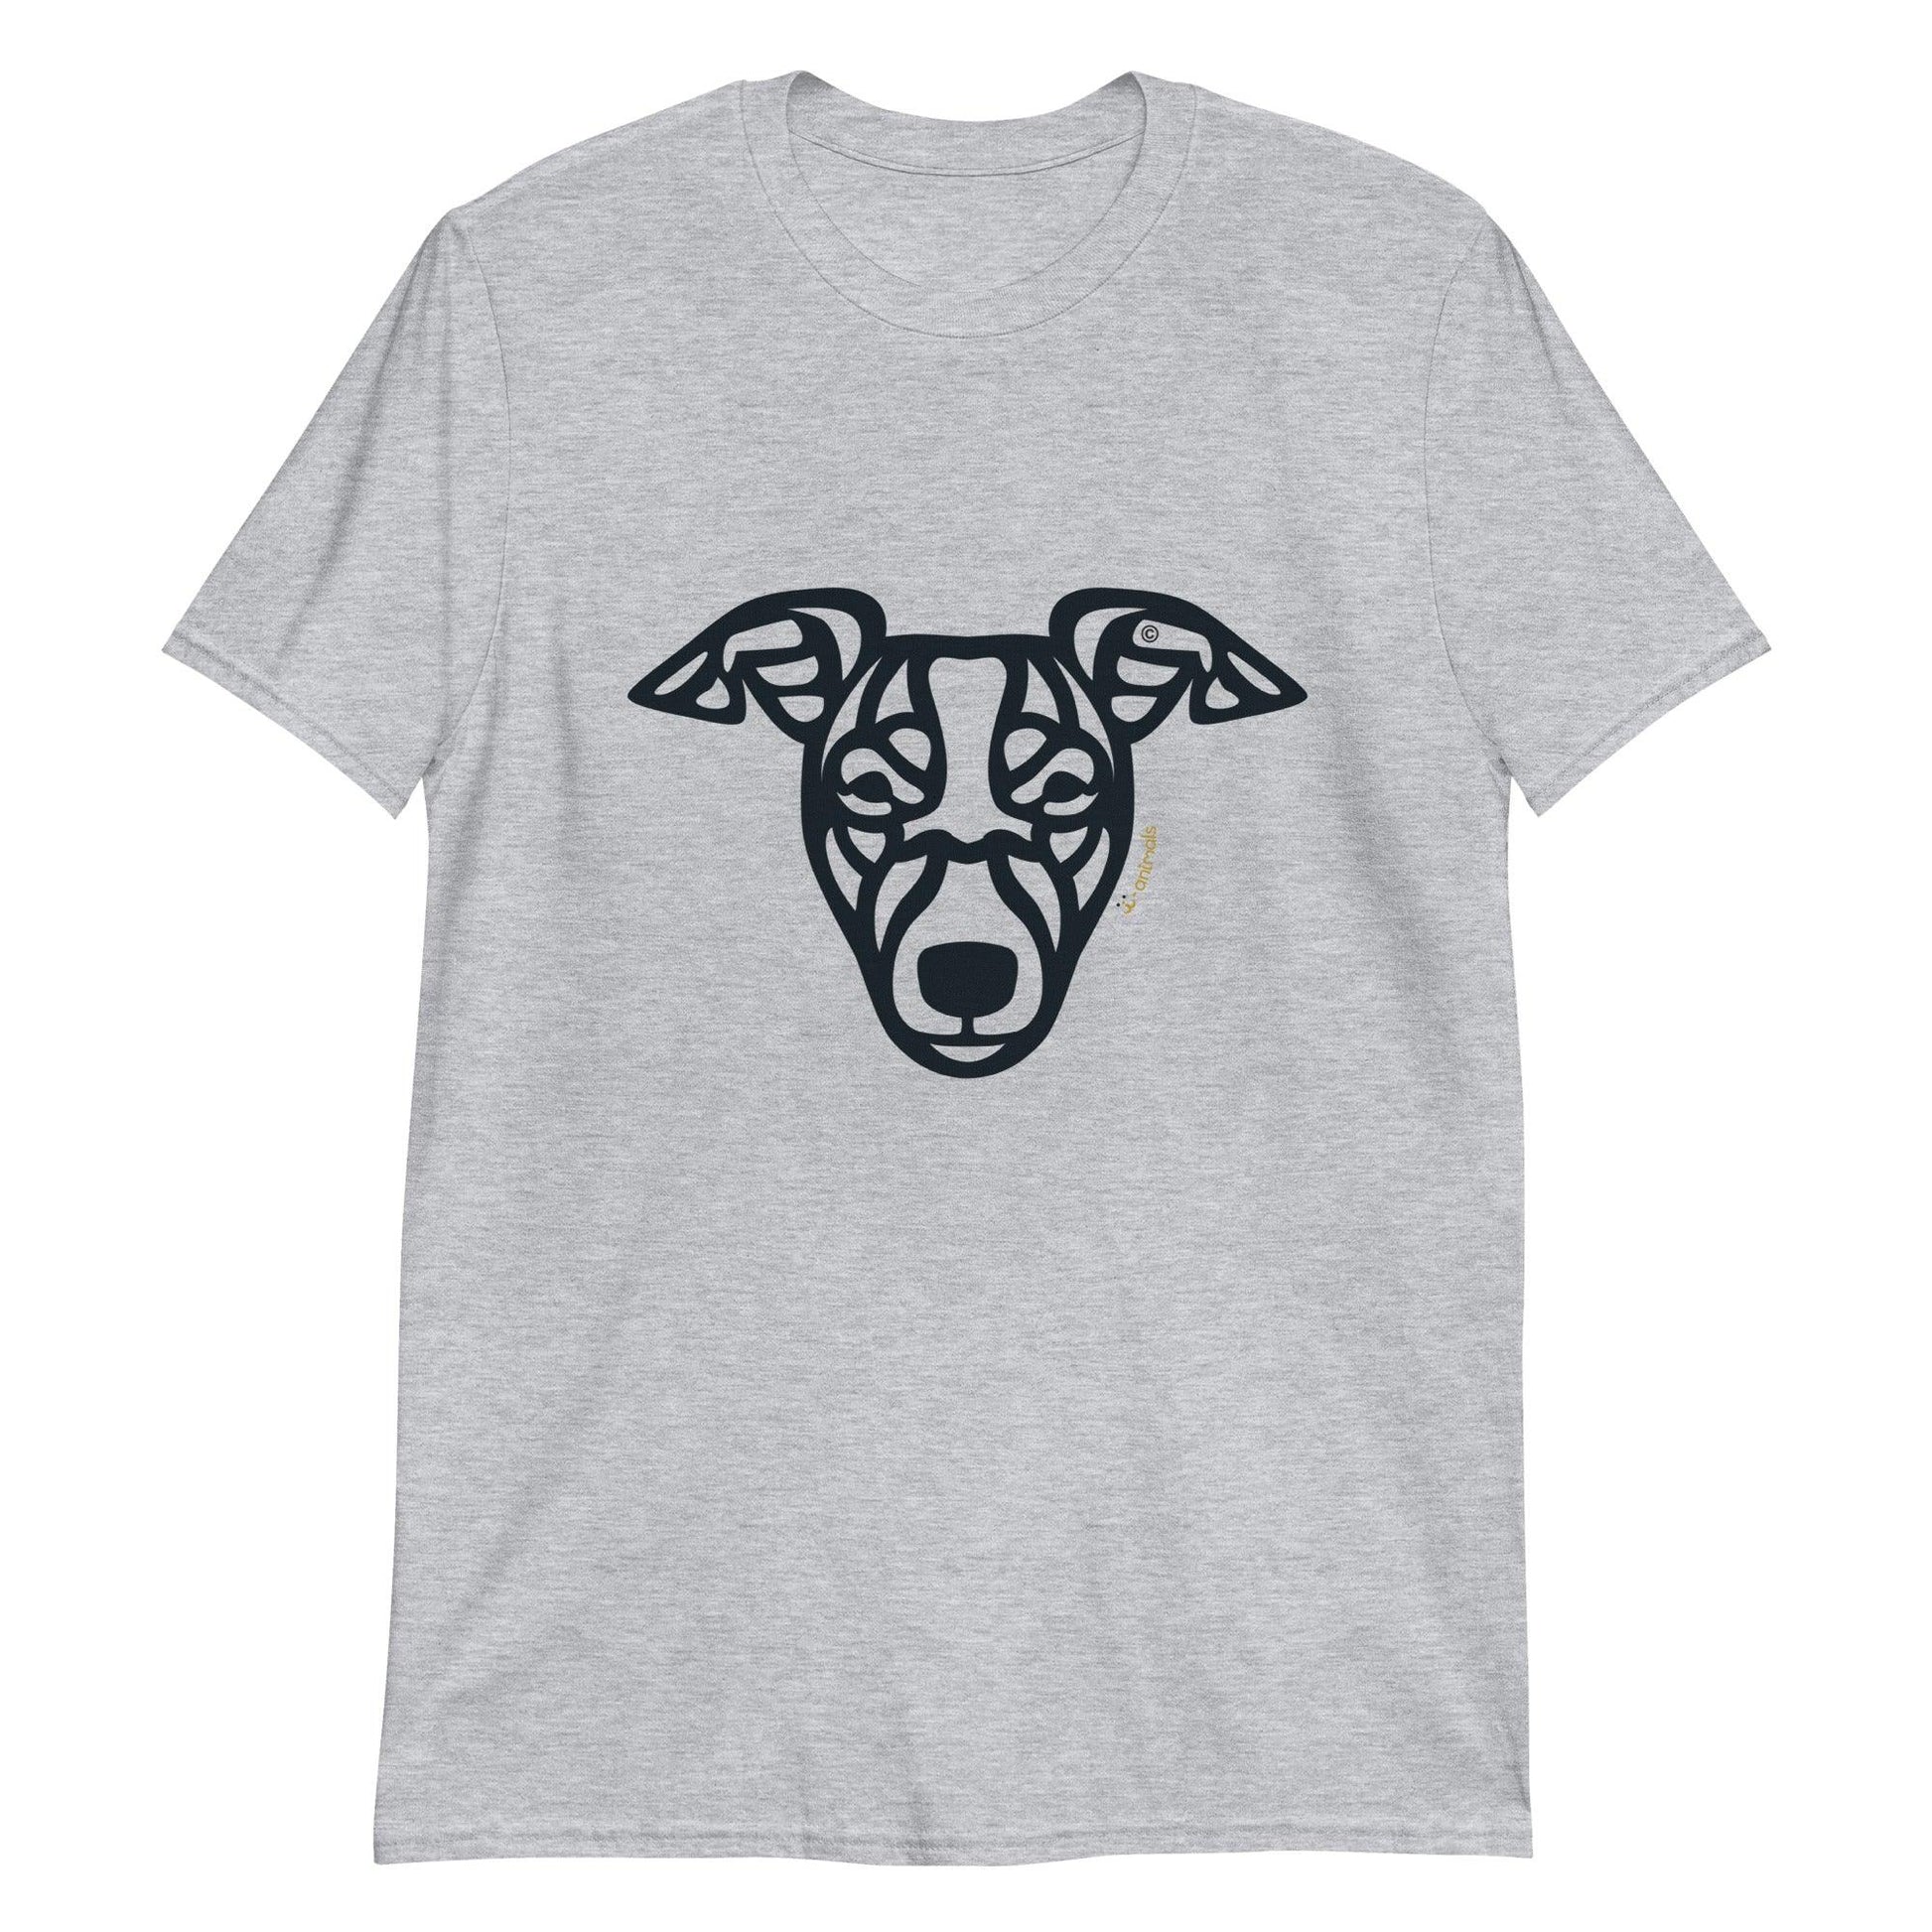 Camiseta unissex de manga curta - “cão vira-lata” - Tribal - Cores Claras - i-animals